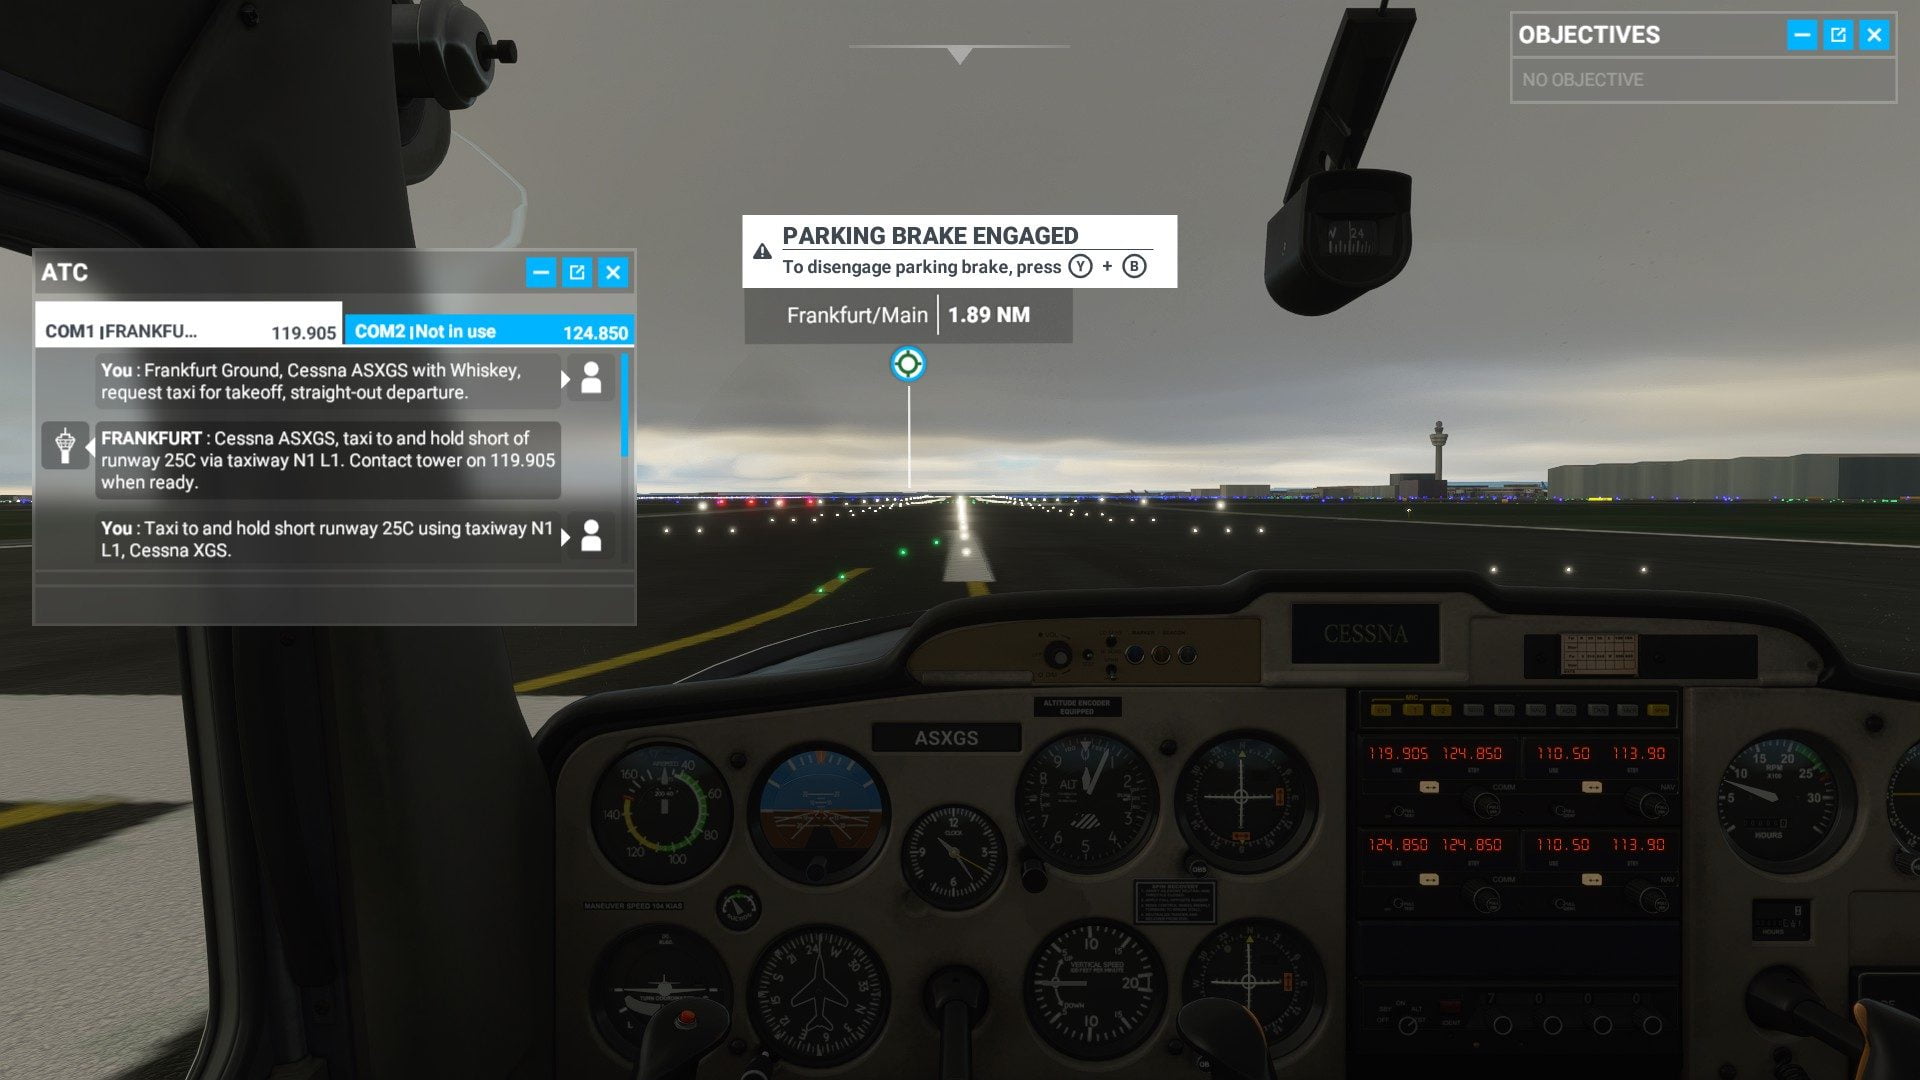 Microsoft Flight Simulator 2020 Standard for Windows 10 PC (10